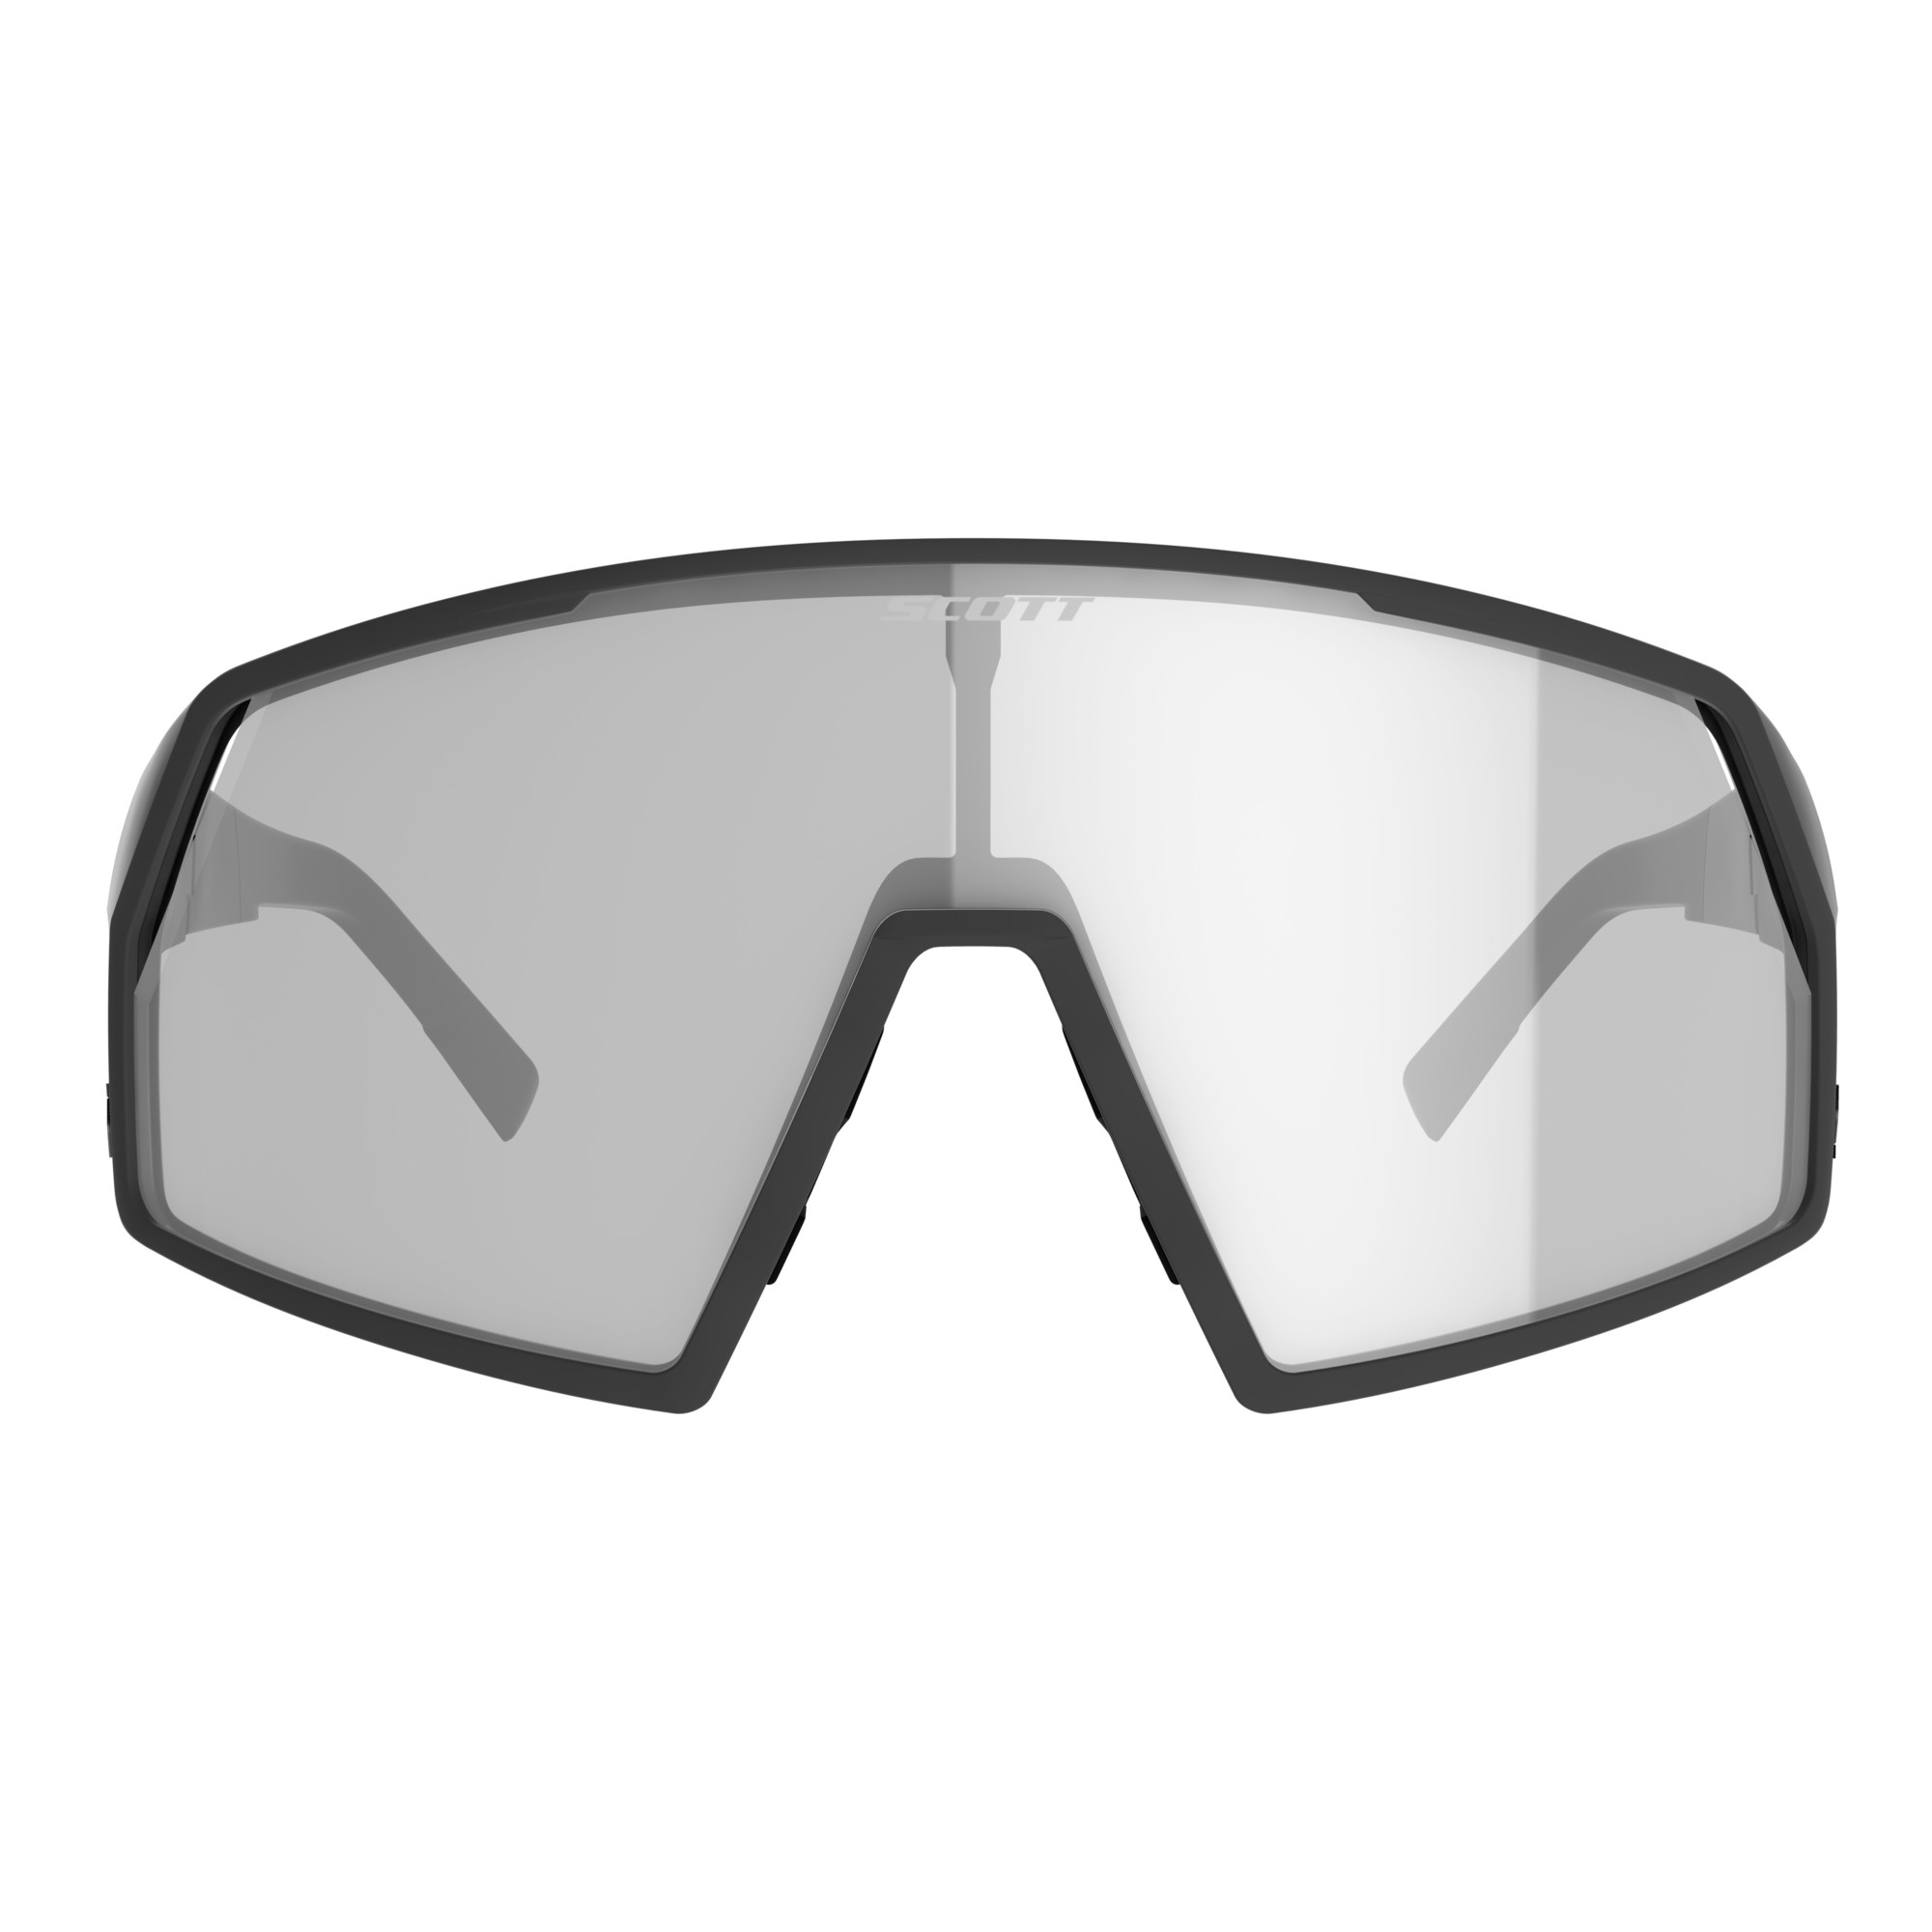 Beklædning - Cykelbriller - Scott Pro Shield Cykelbrille - Sort/Transparent